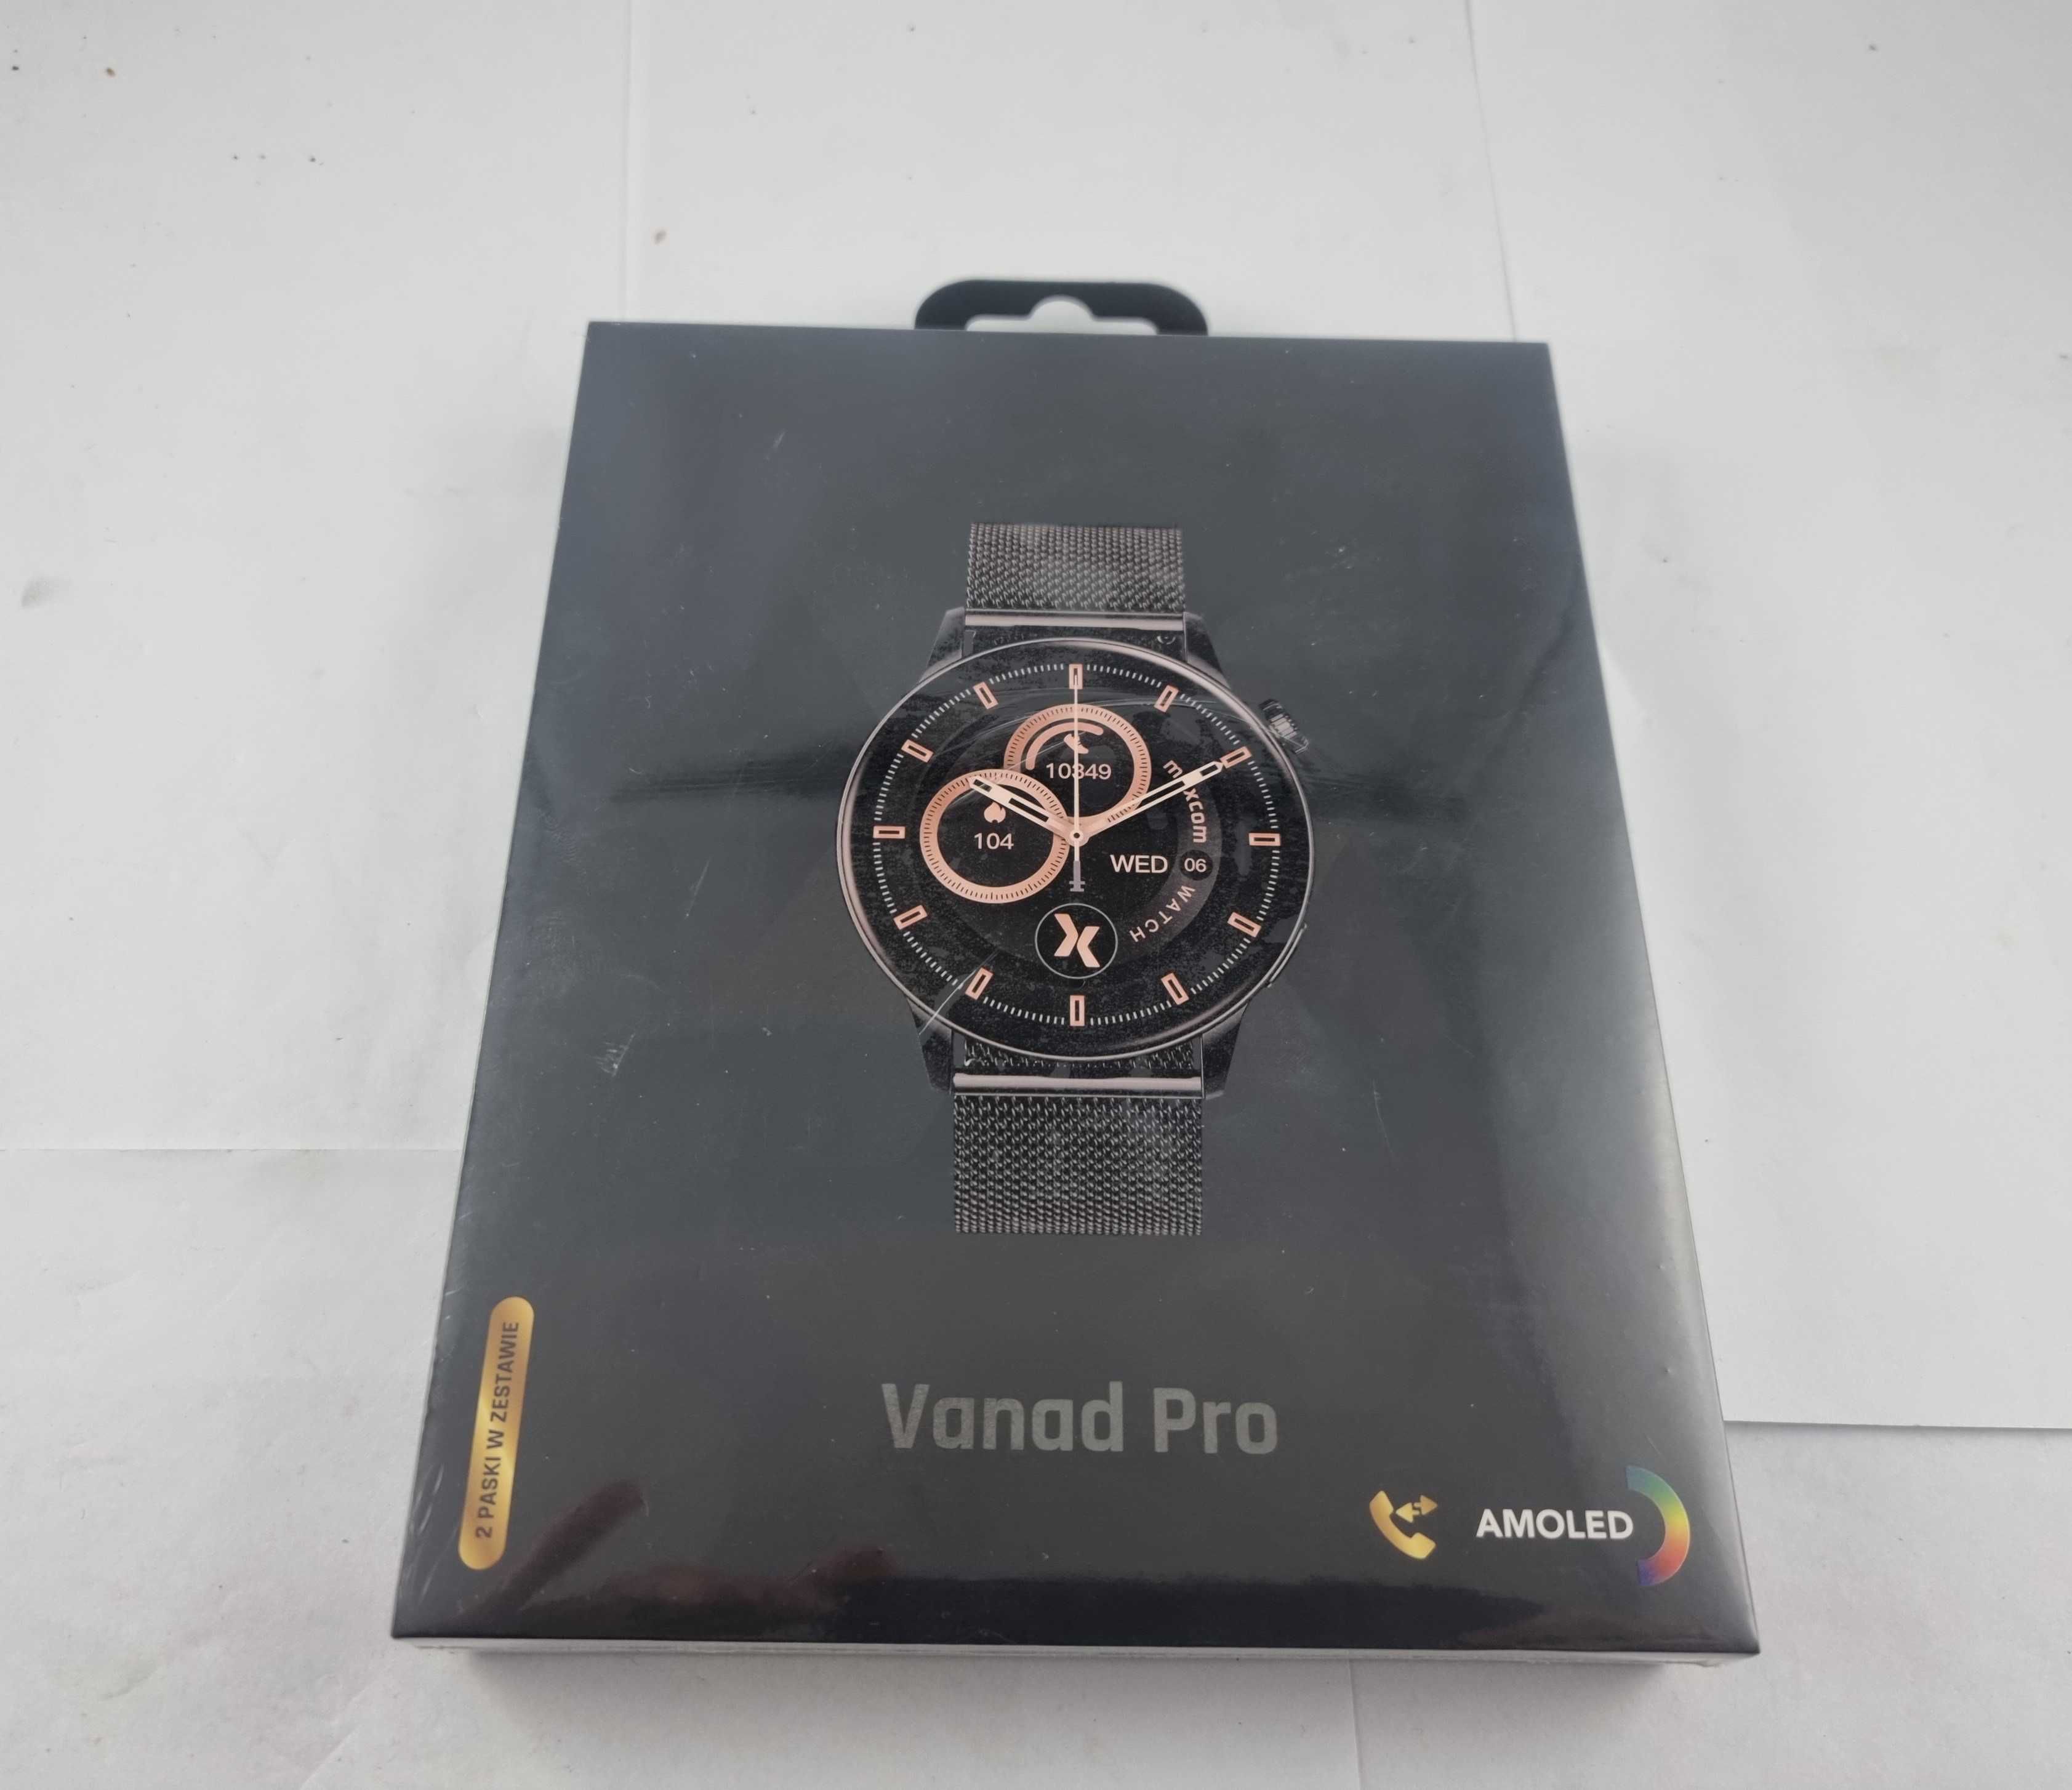 Smartwatch Maxcom Vanad Pro FW58 - Komis Wadowice